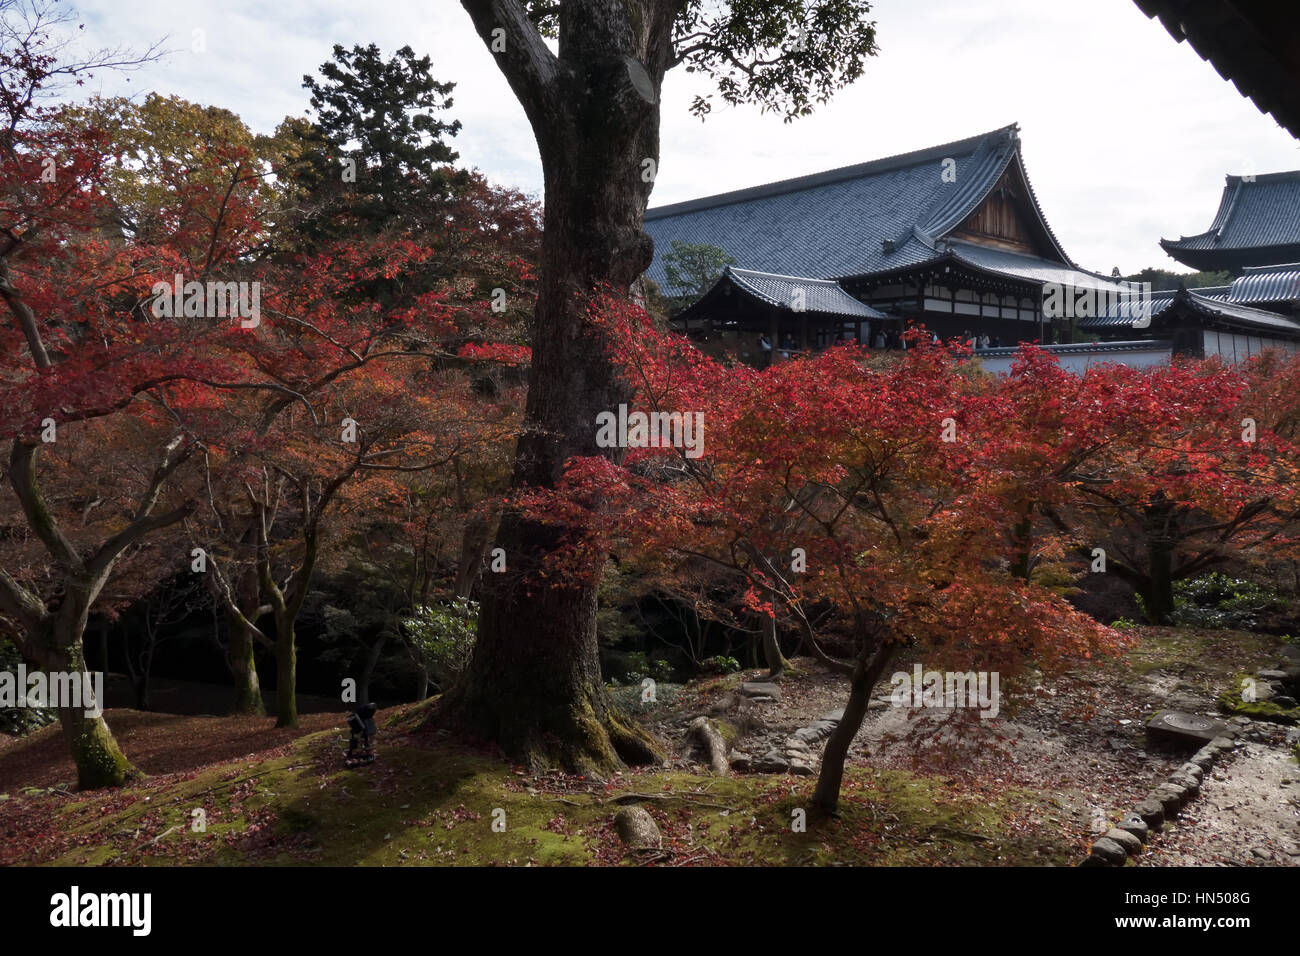 Tofukuji or Tofuku-ji temple in Kyoto, Japan, Asia. Park in fall season with autumn foliage on trees Stock Photo